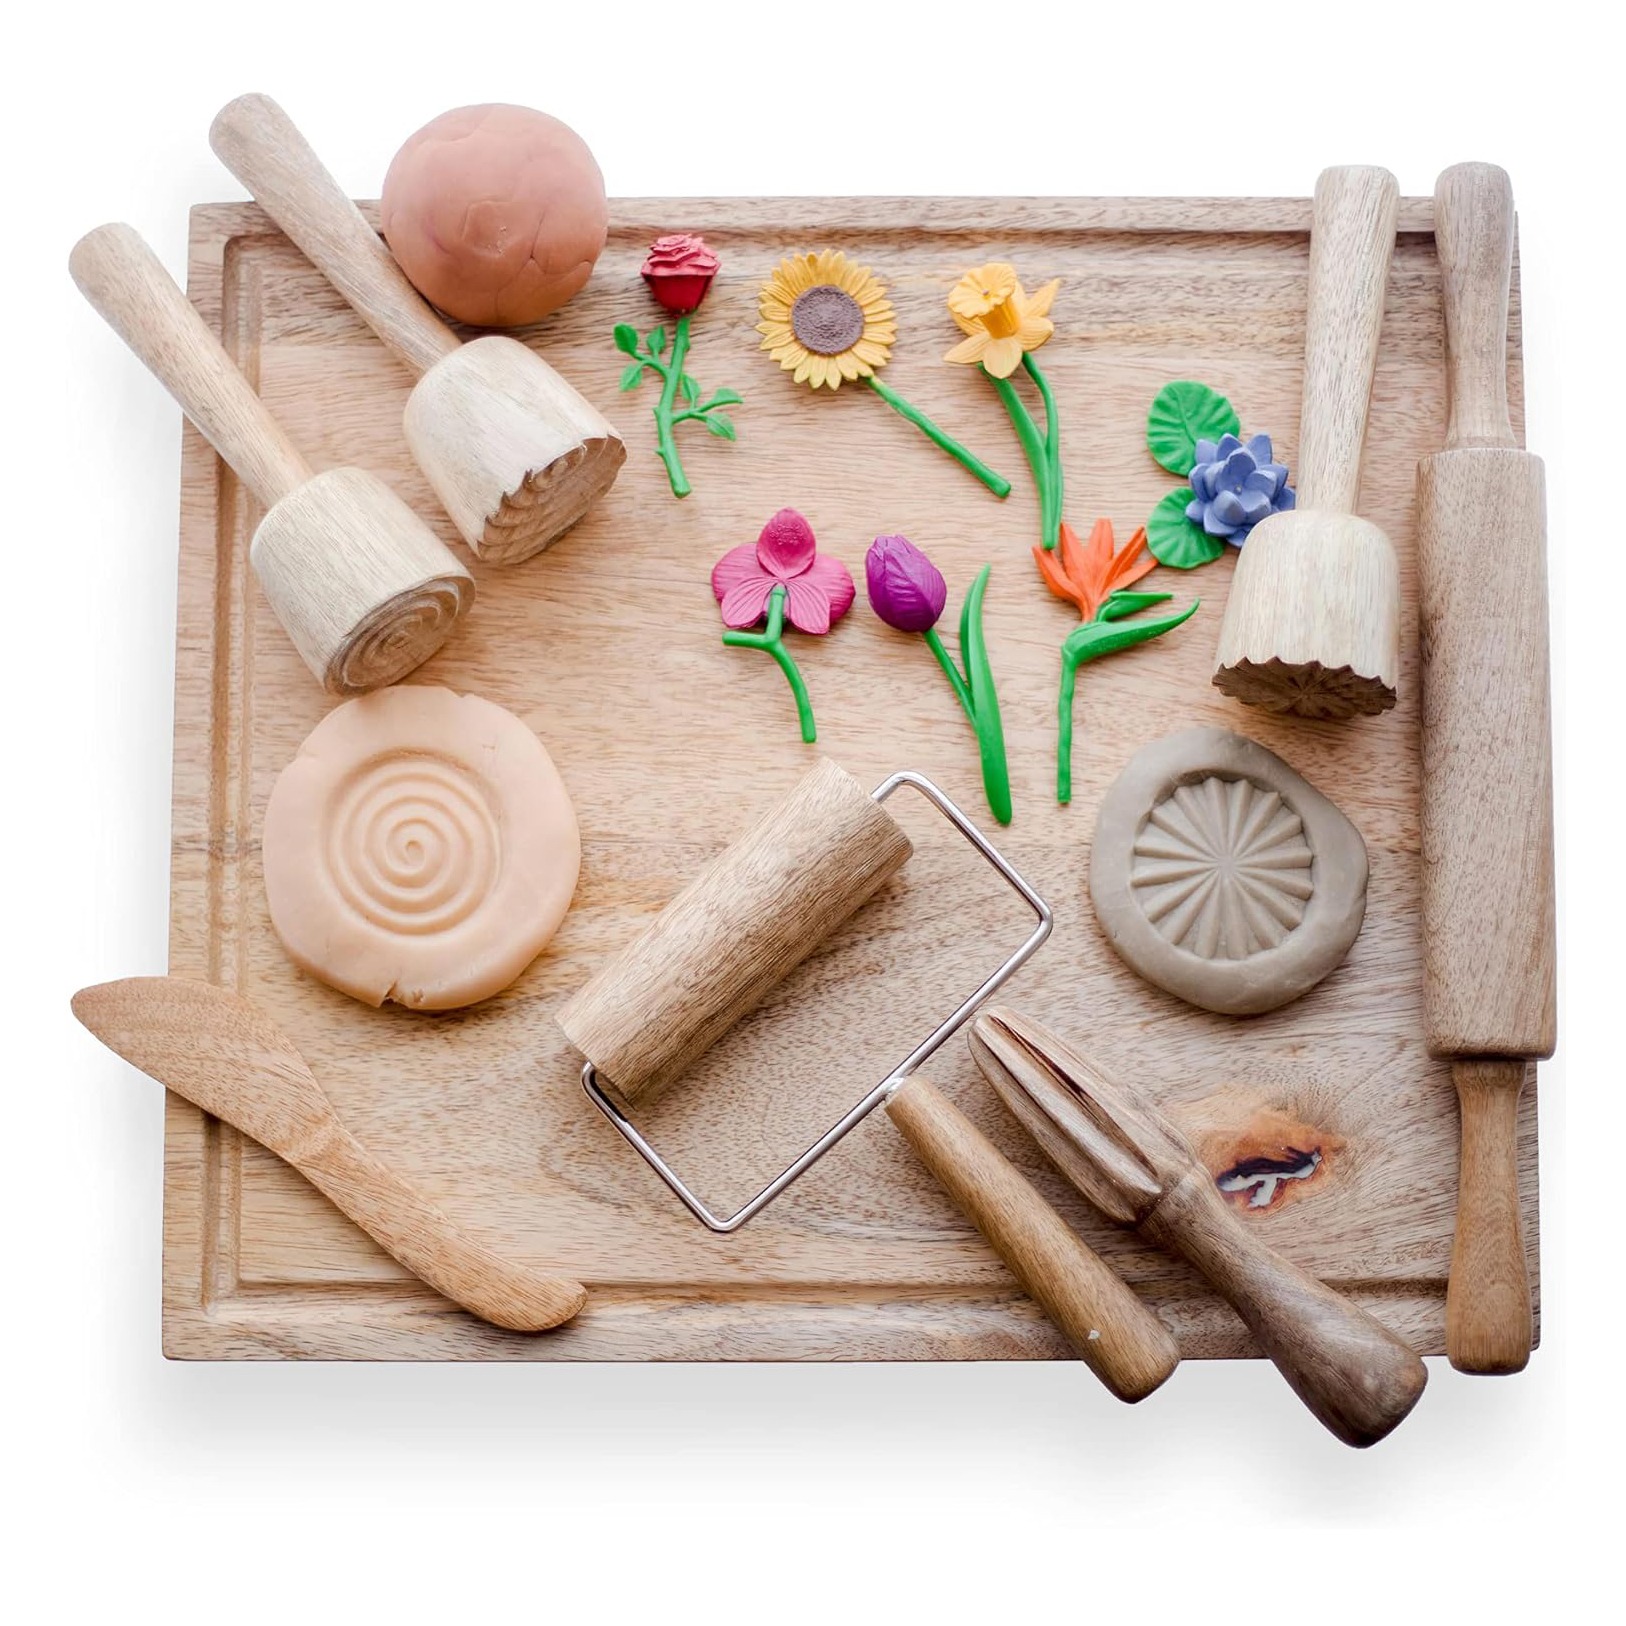 wooden play dough tool set